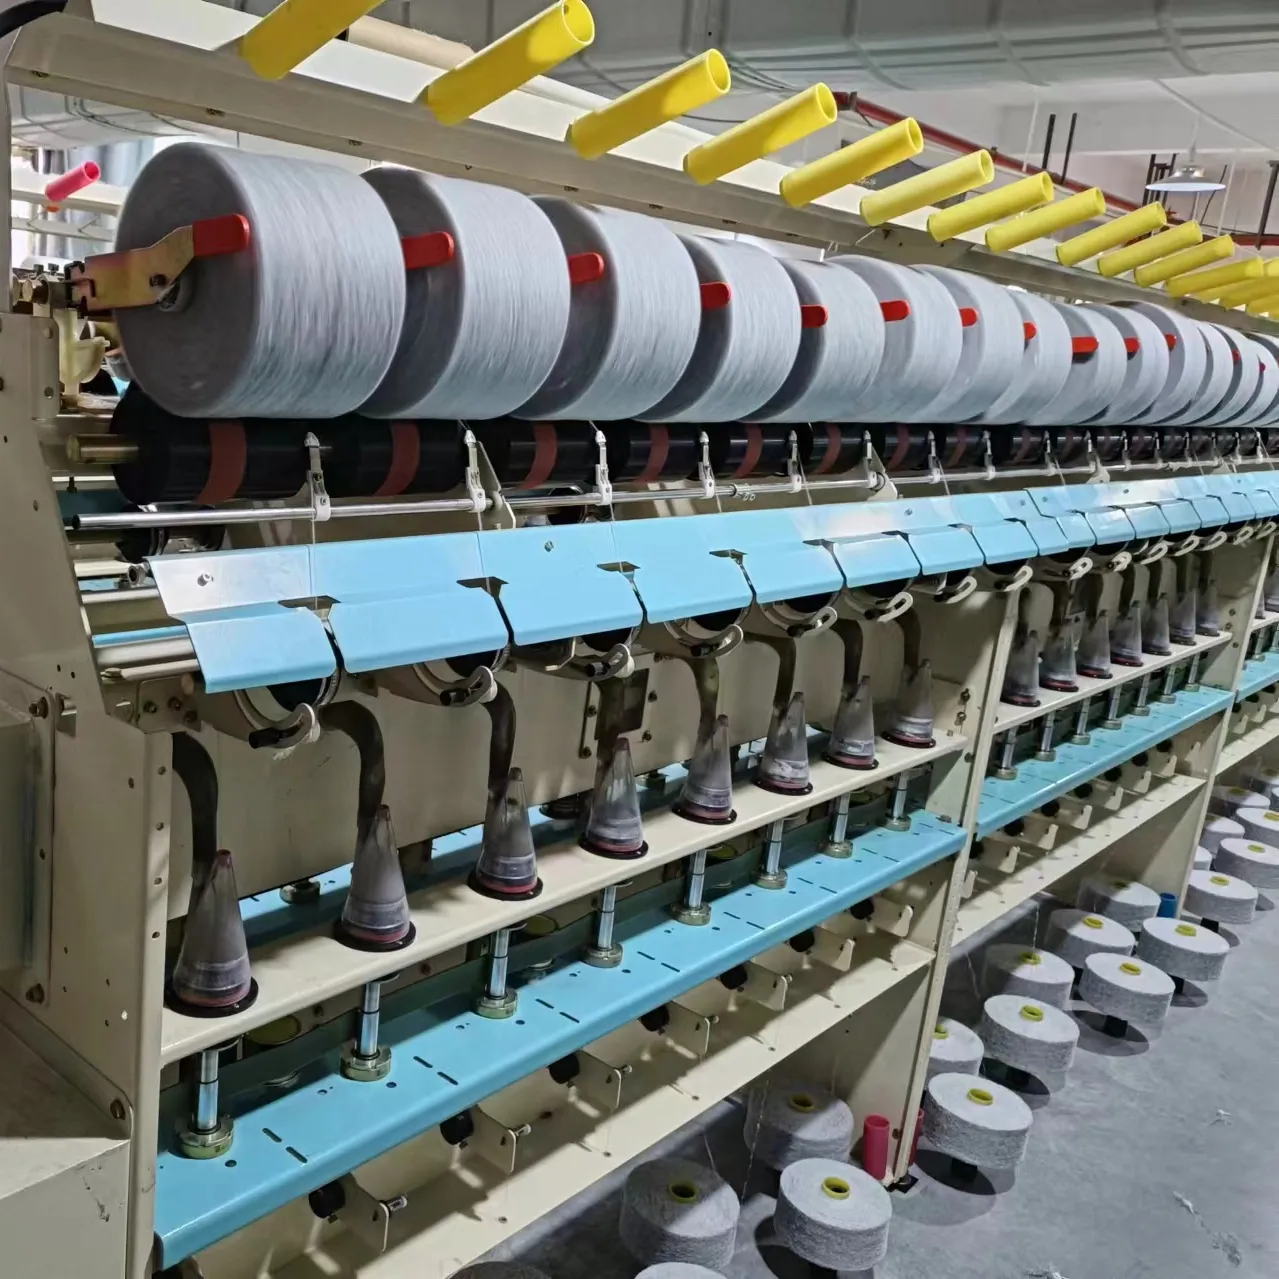 Ucuz fiyat ikinci el sueding makinesi tekstil sueding makinesi